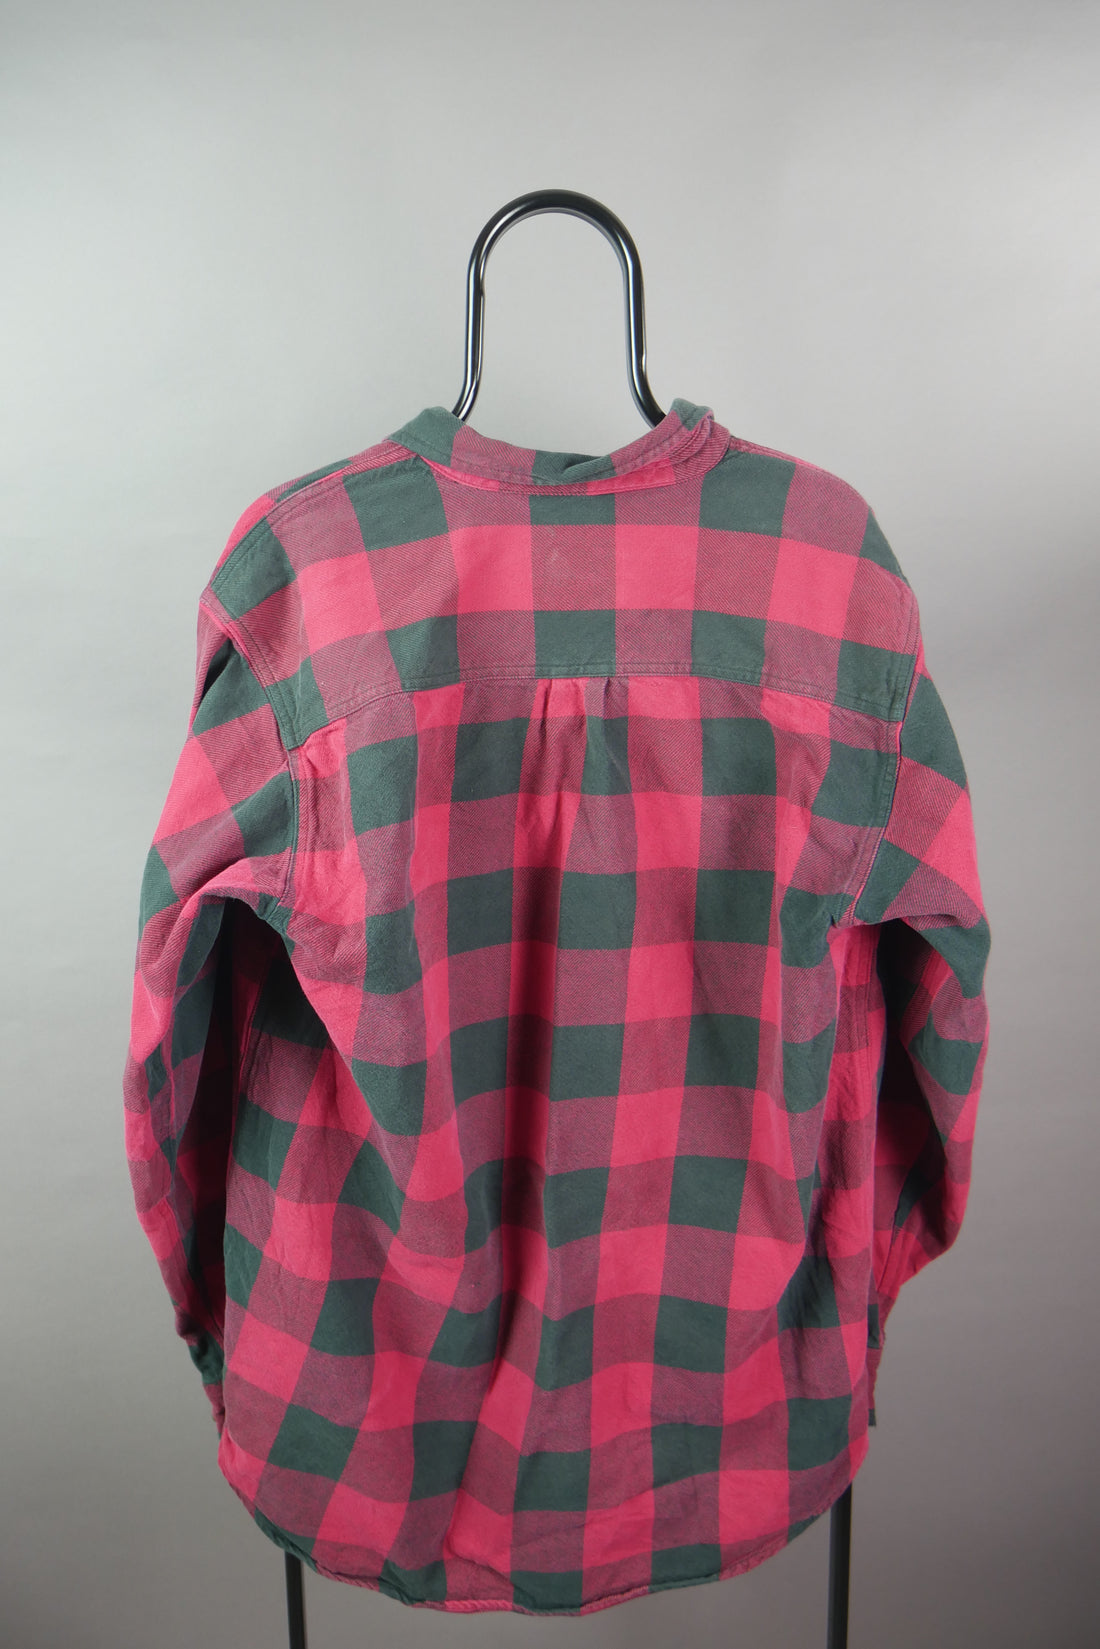 The Vintage Heavyweight Cotton Checkered Overshirt (XL)